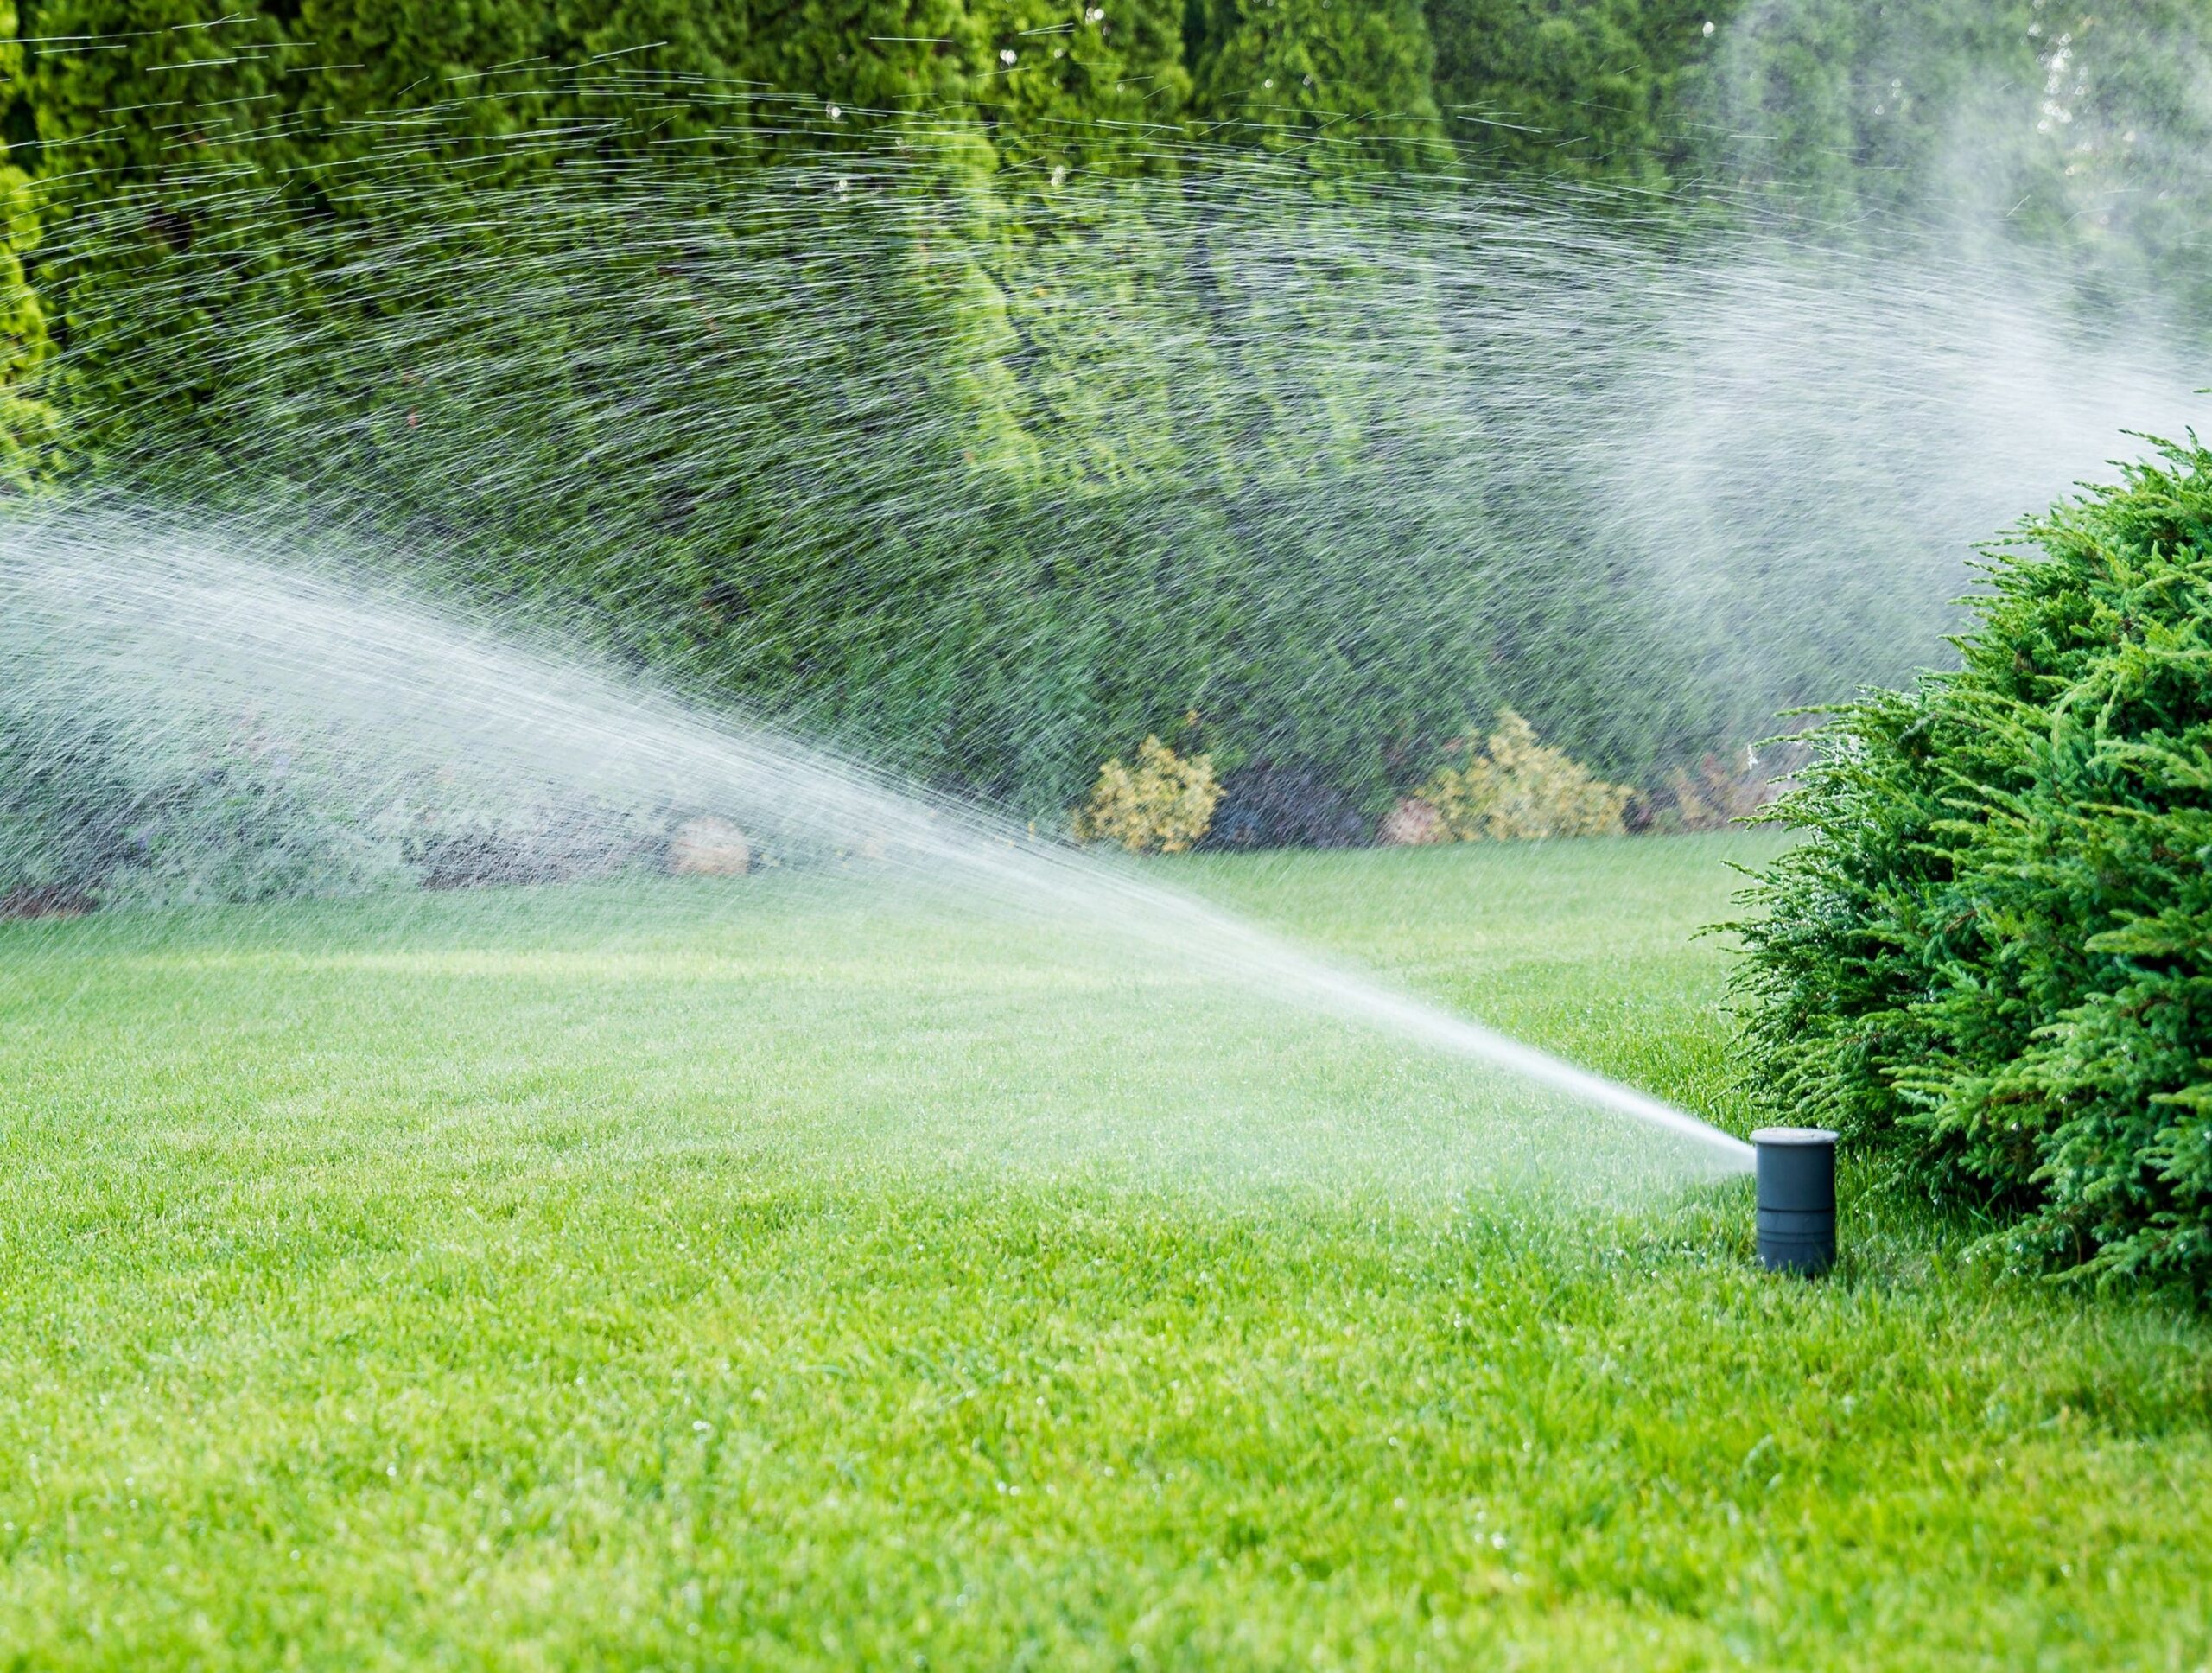 Town of Pine Ridge | Irrigation of Green Grass & Sprinkler | A James Global